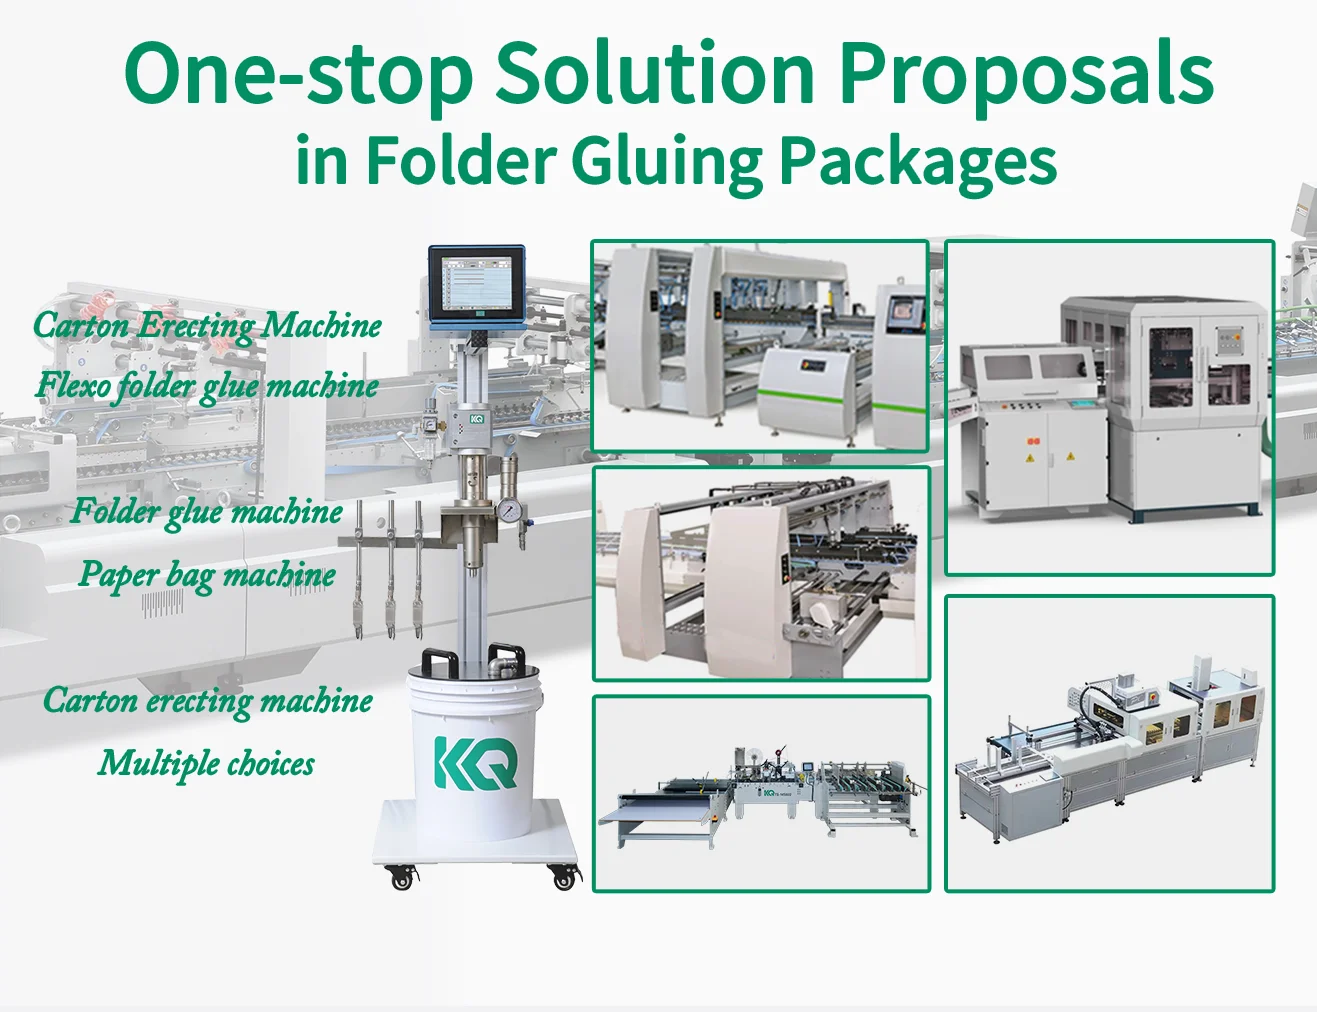 Folder Gluer in Kq Cold Glue Spray Adhesive Machine with Four Guns